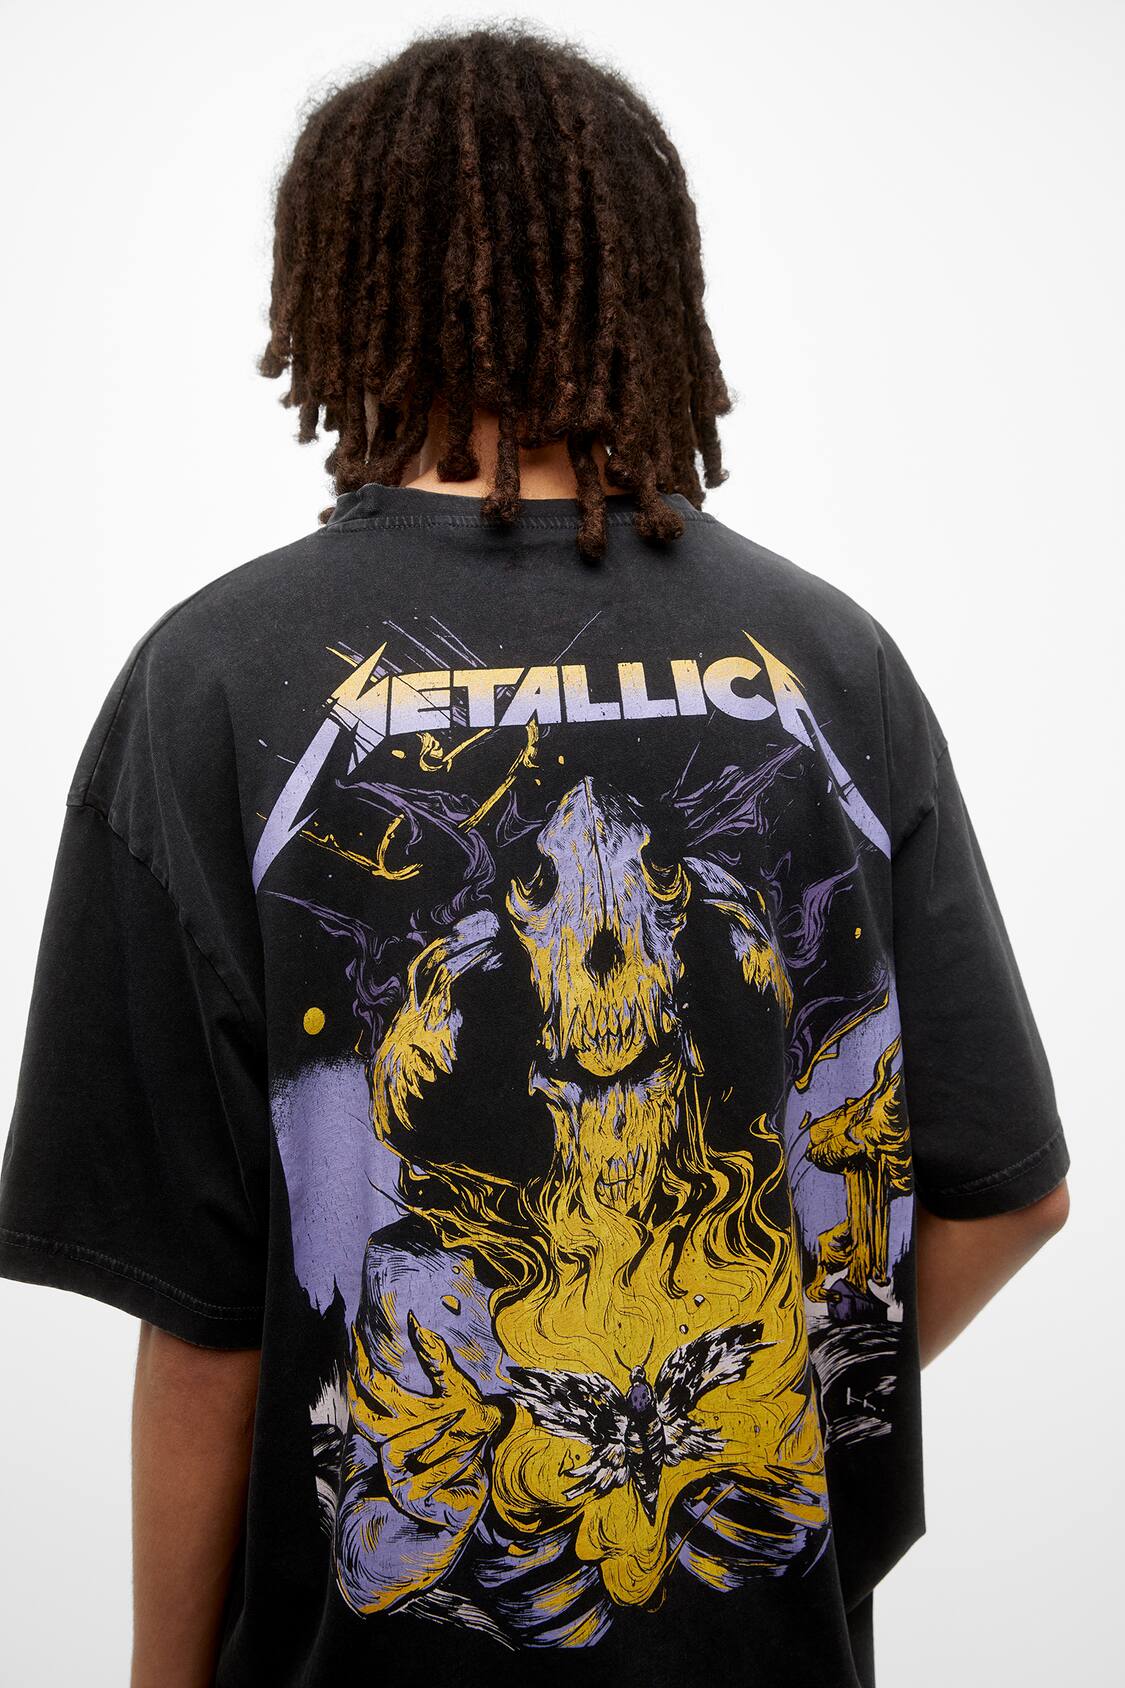 cobertura paquete Demonio Short sleeve Metallica T-shirt - pull&bear